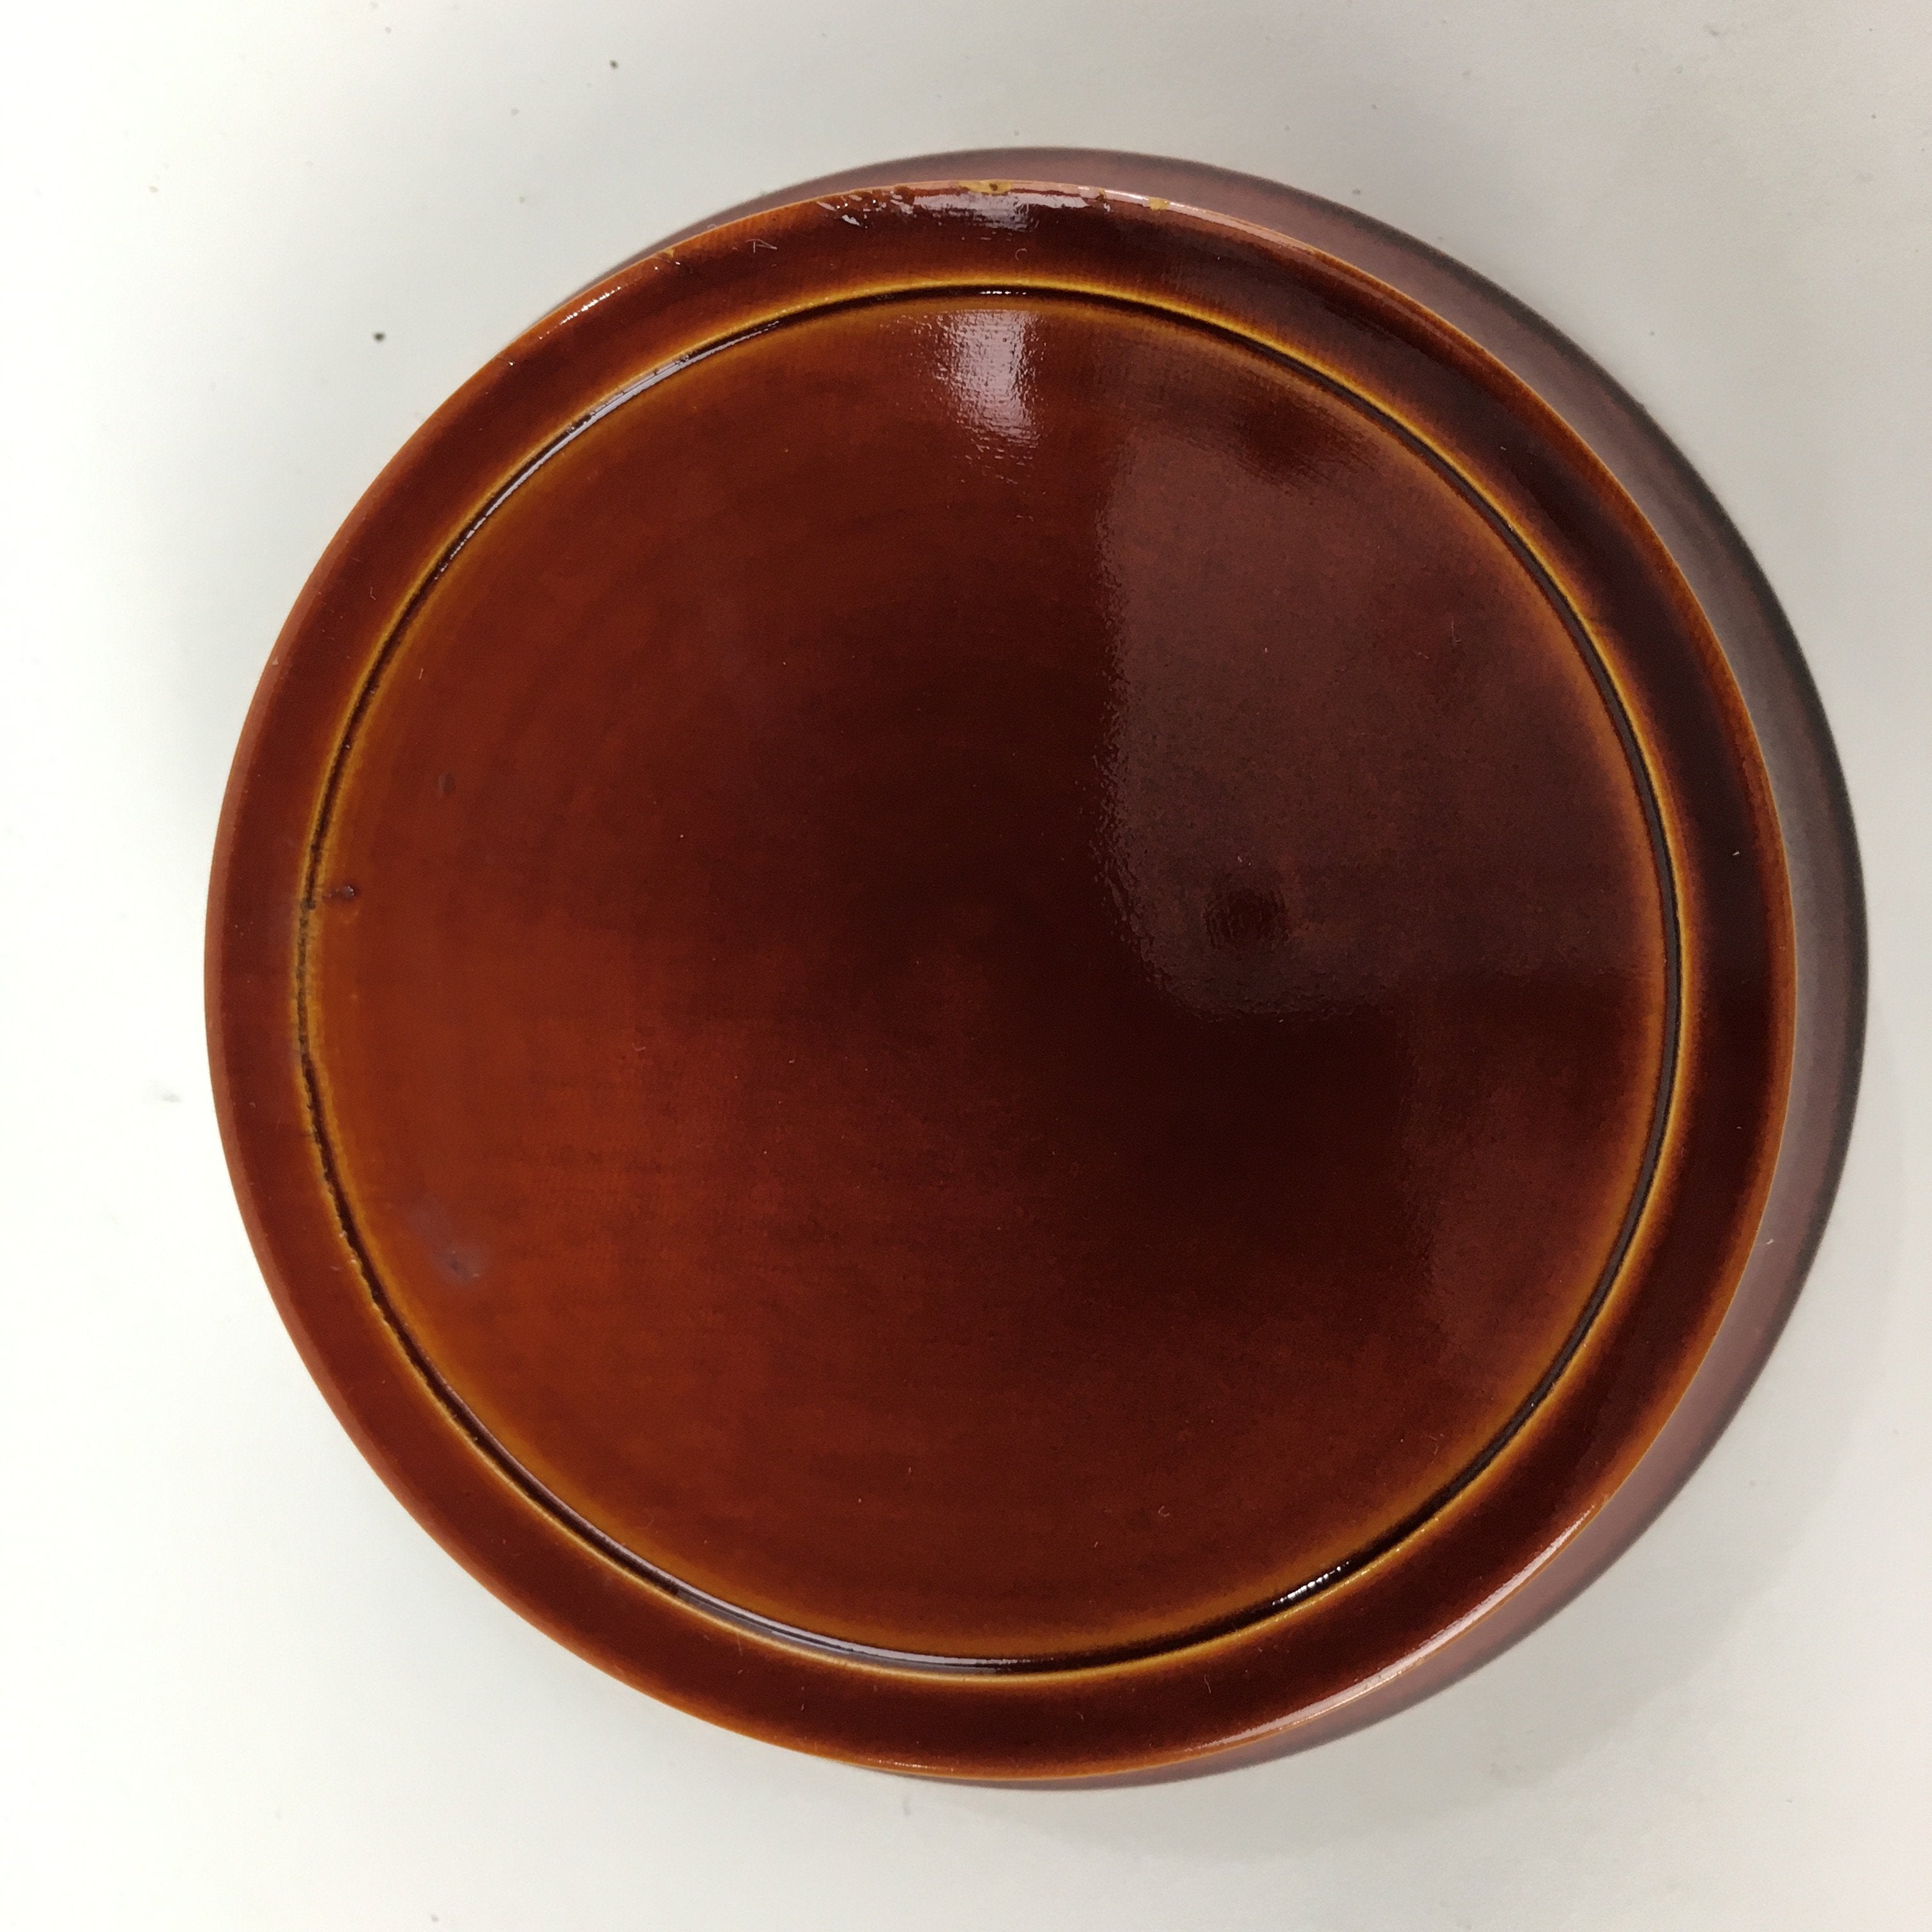 Japanese Wooden Lacquerware 5pc Plates Vtg Round Shunkei-Nuri Brown UR593